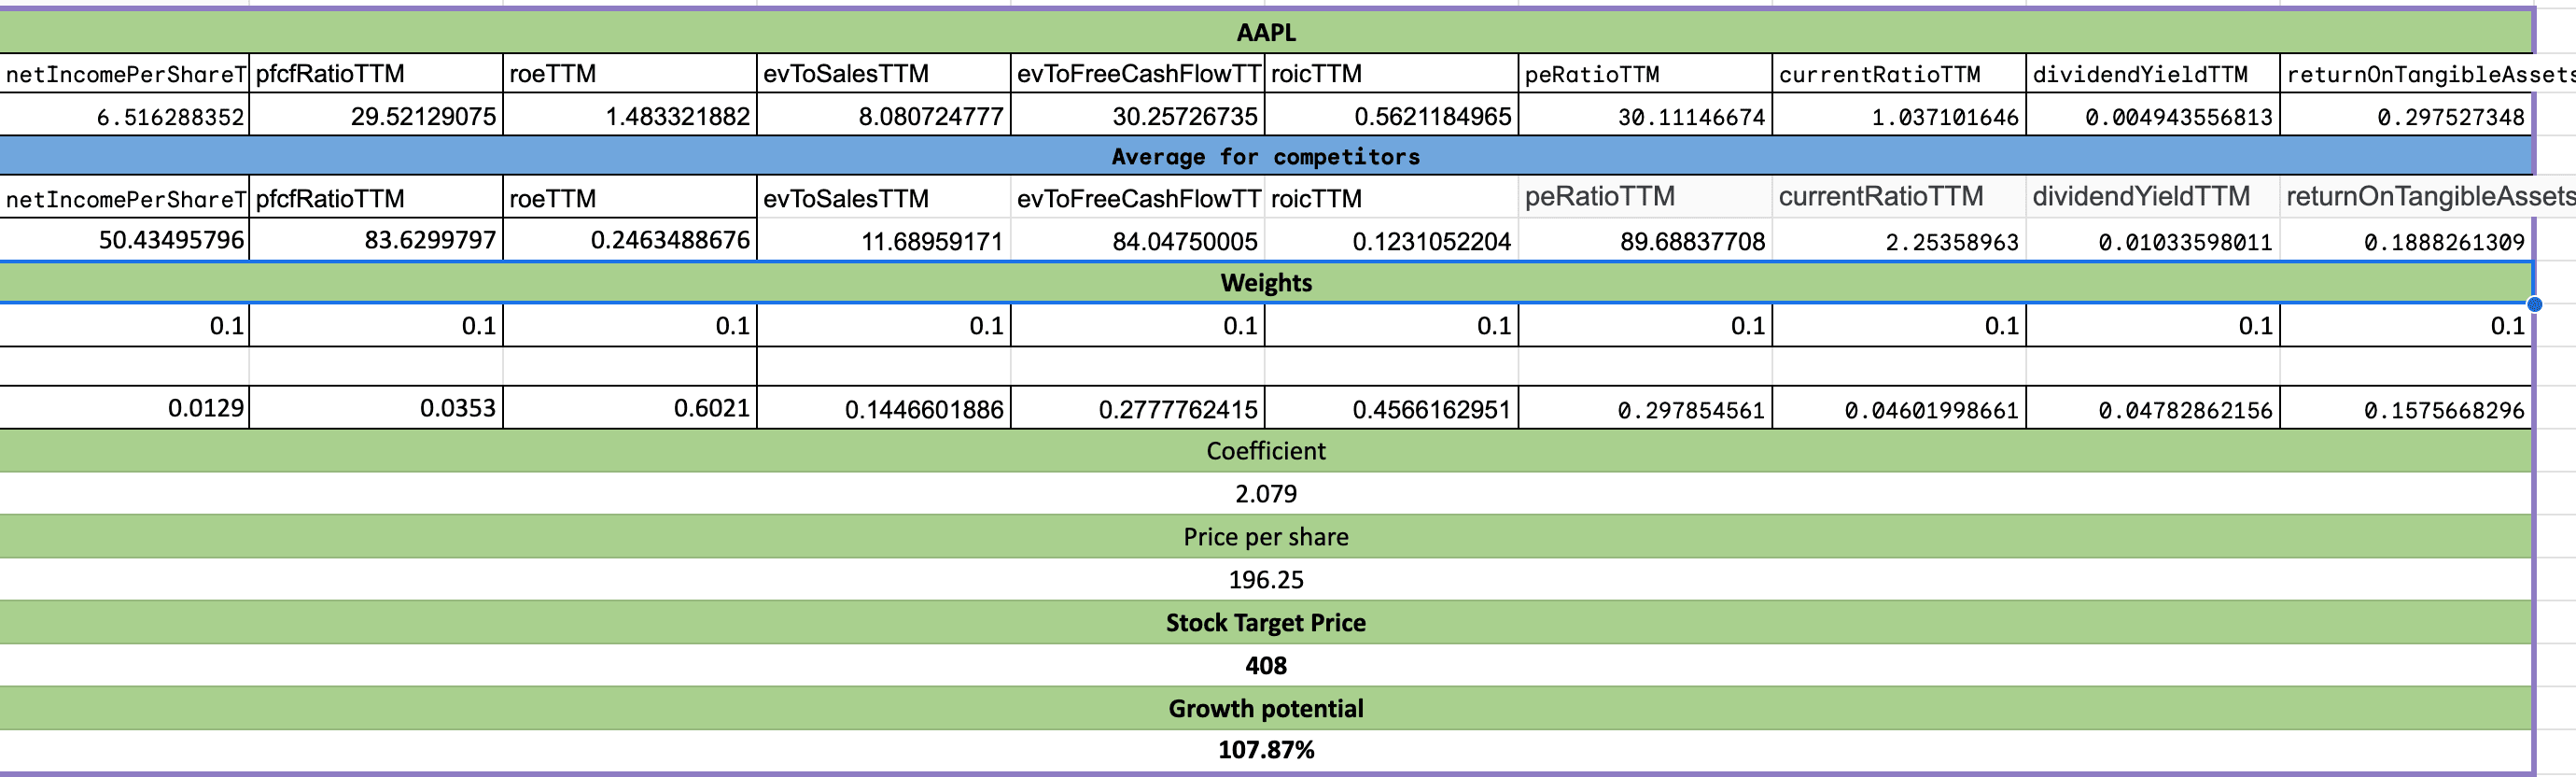 stock target price calculation